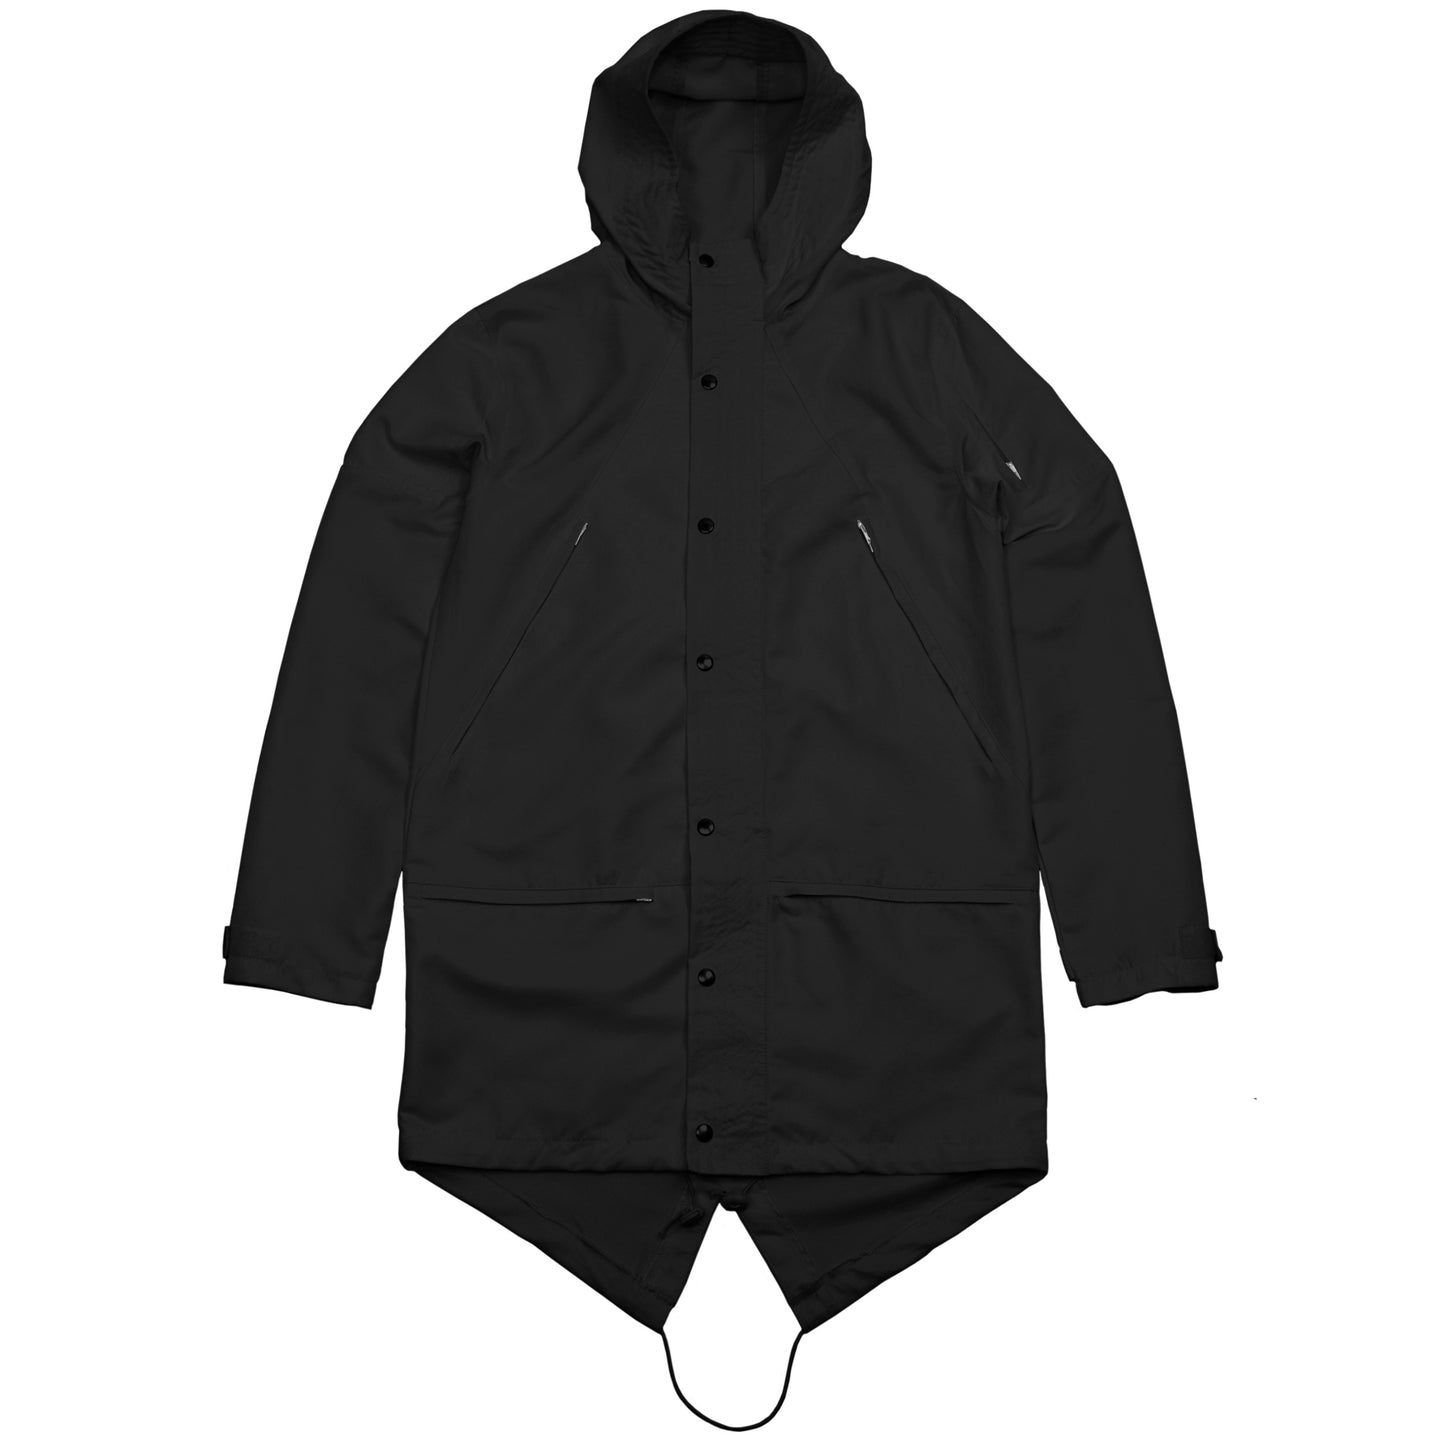 16er Parka Fishtail Jacket : Black